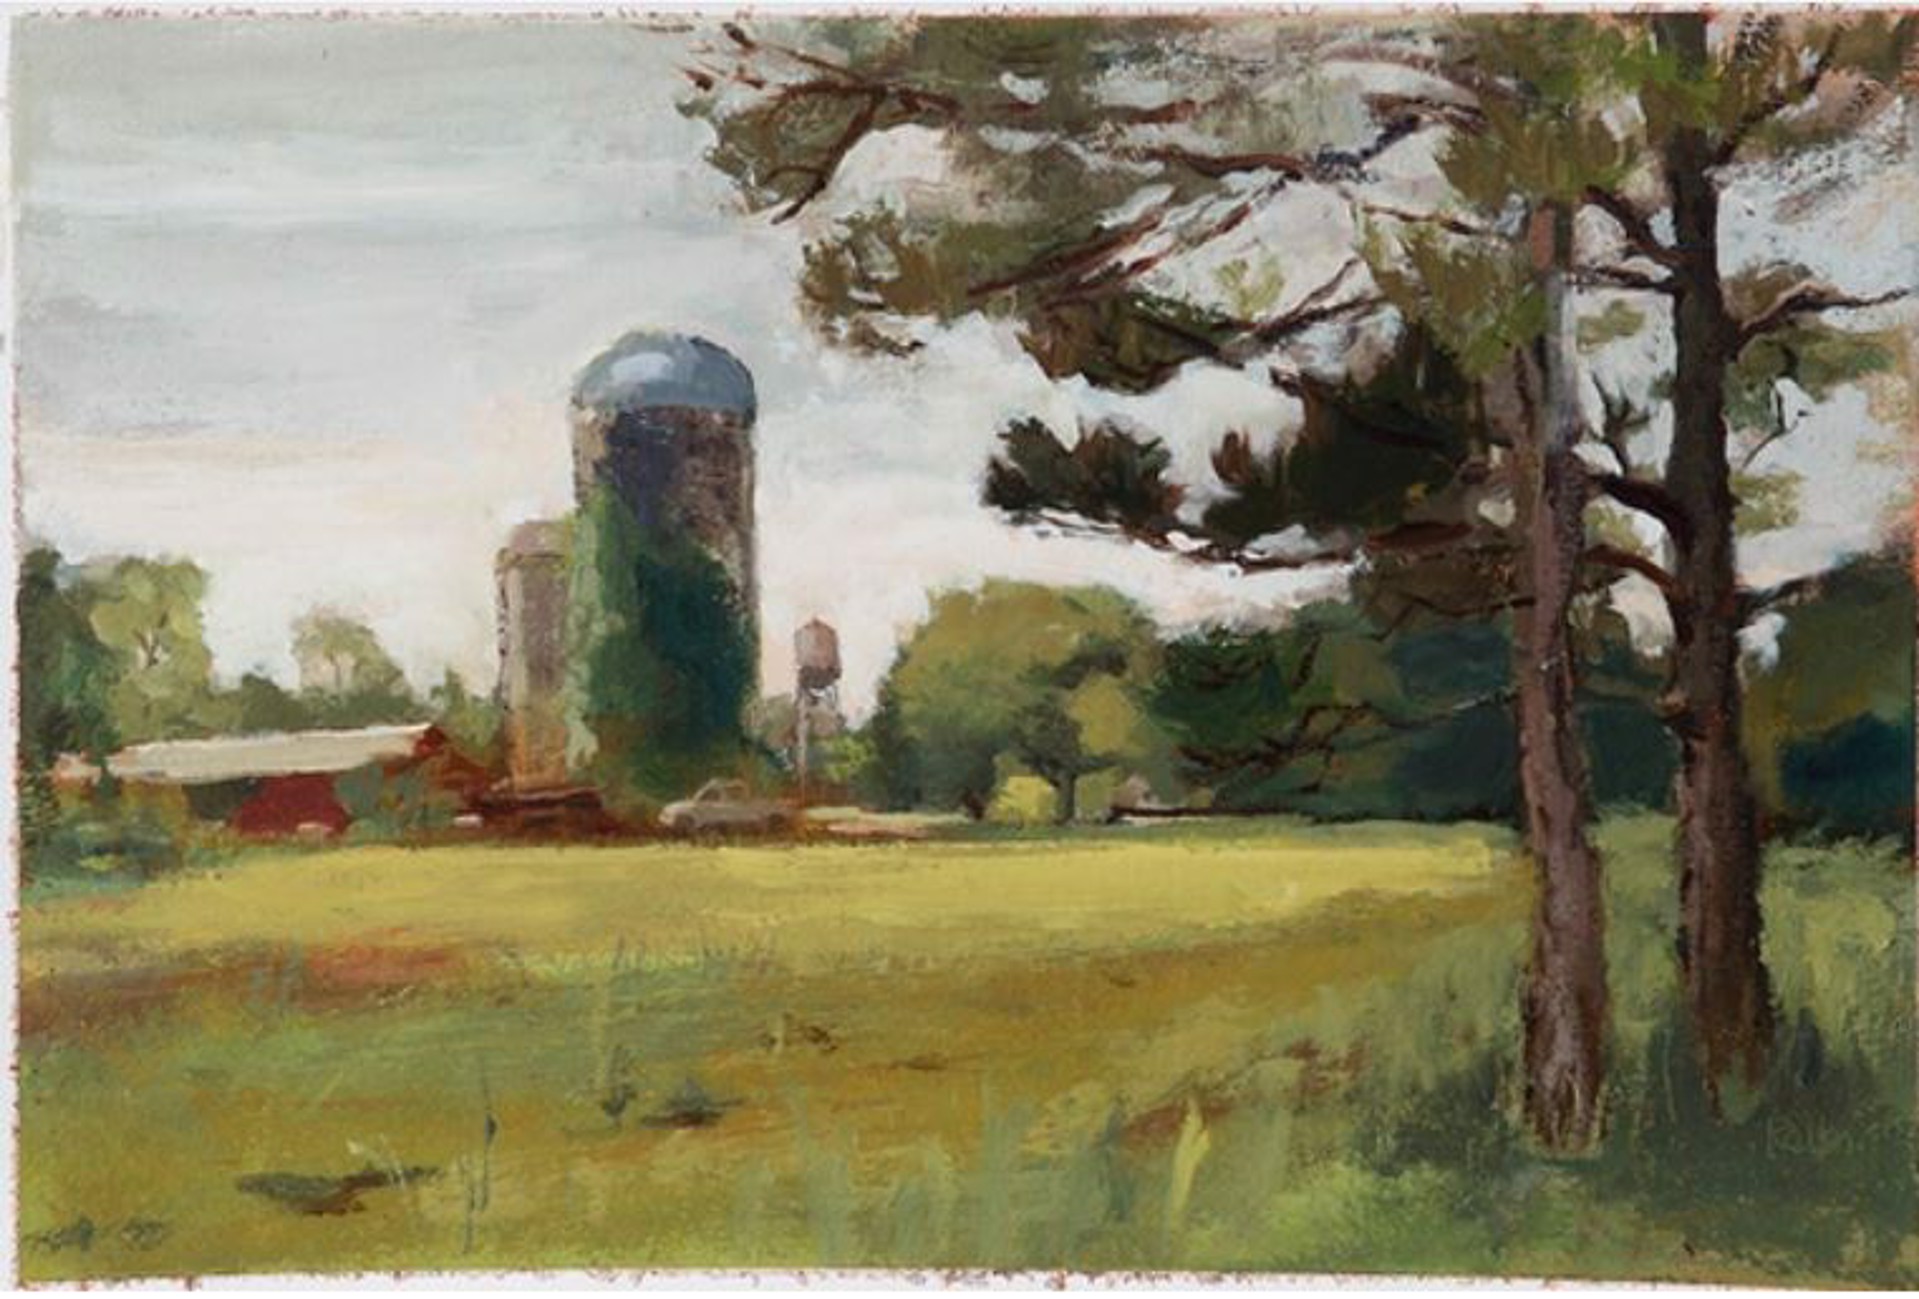 The Farm by Kathryn Keller